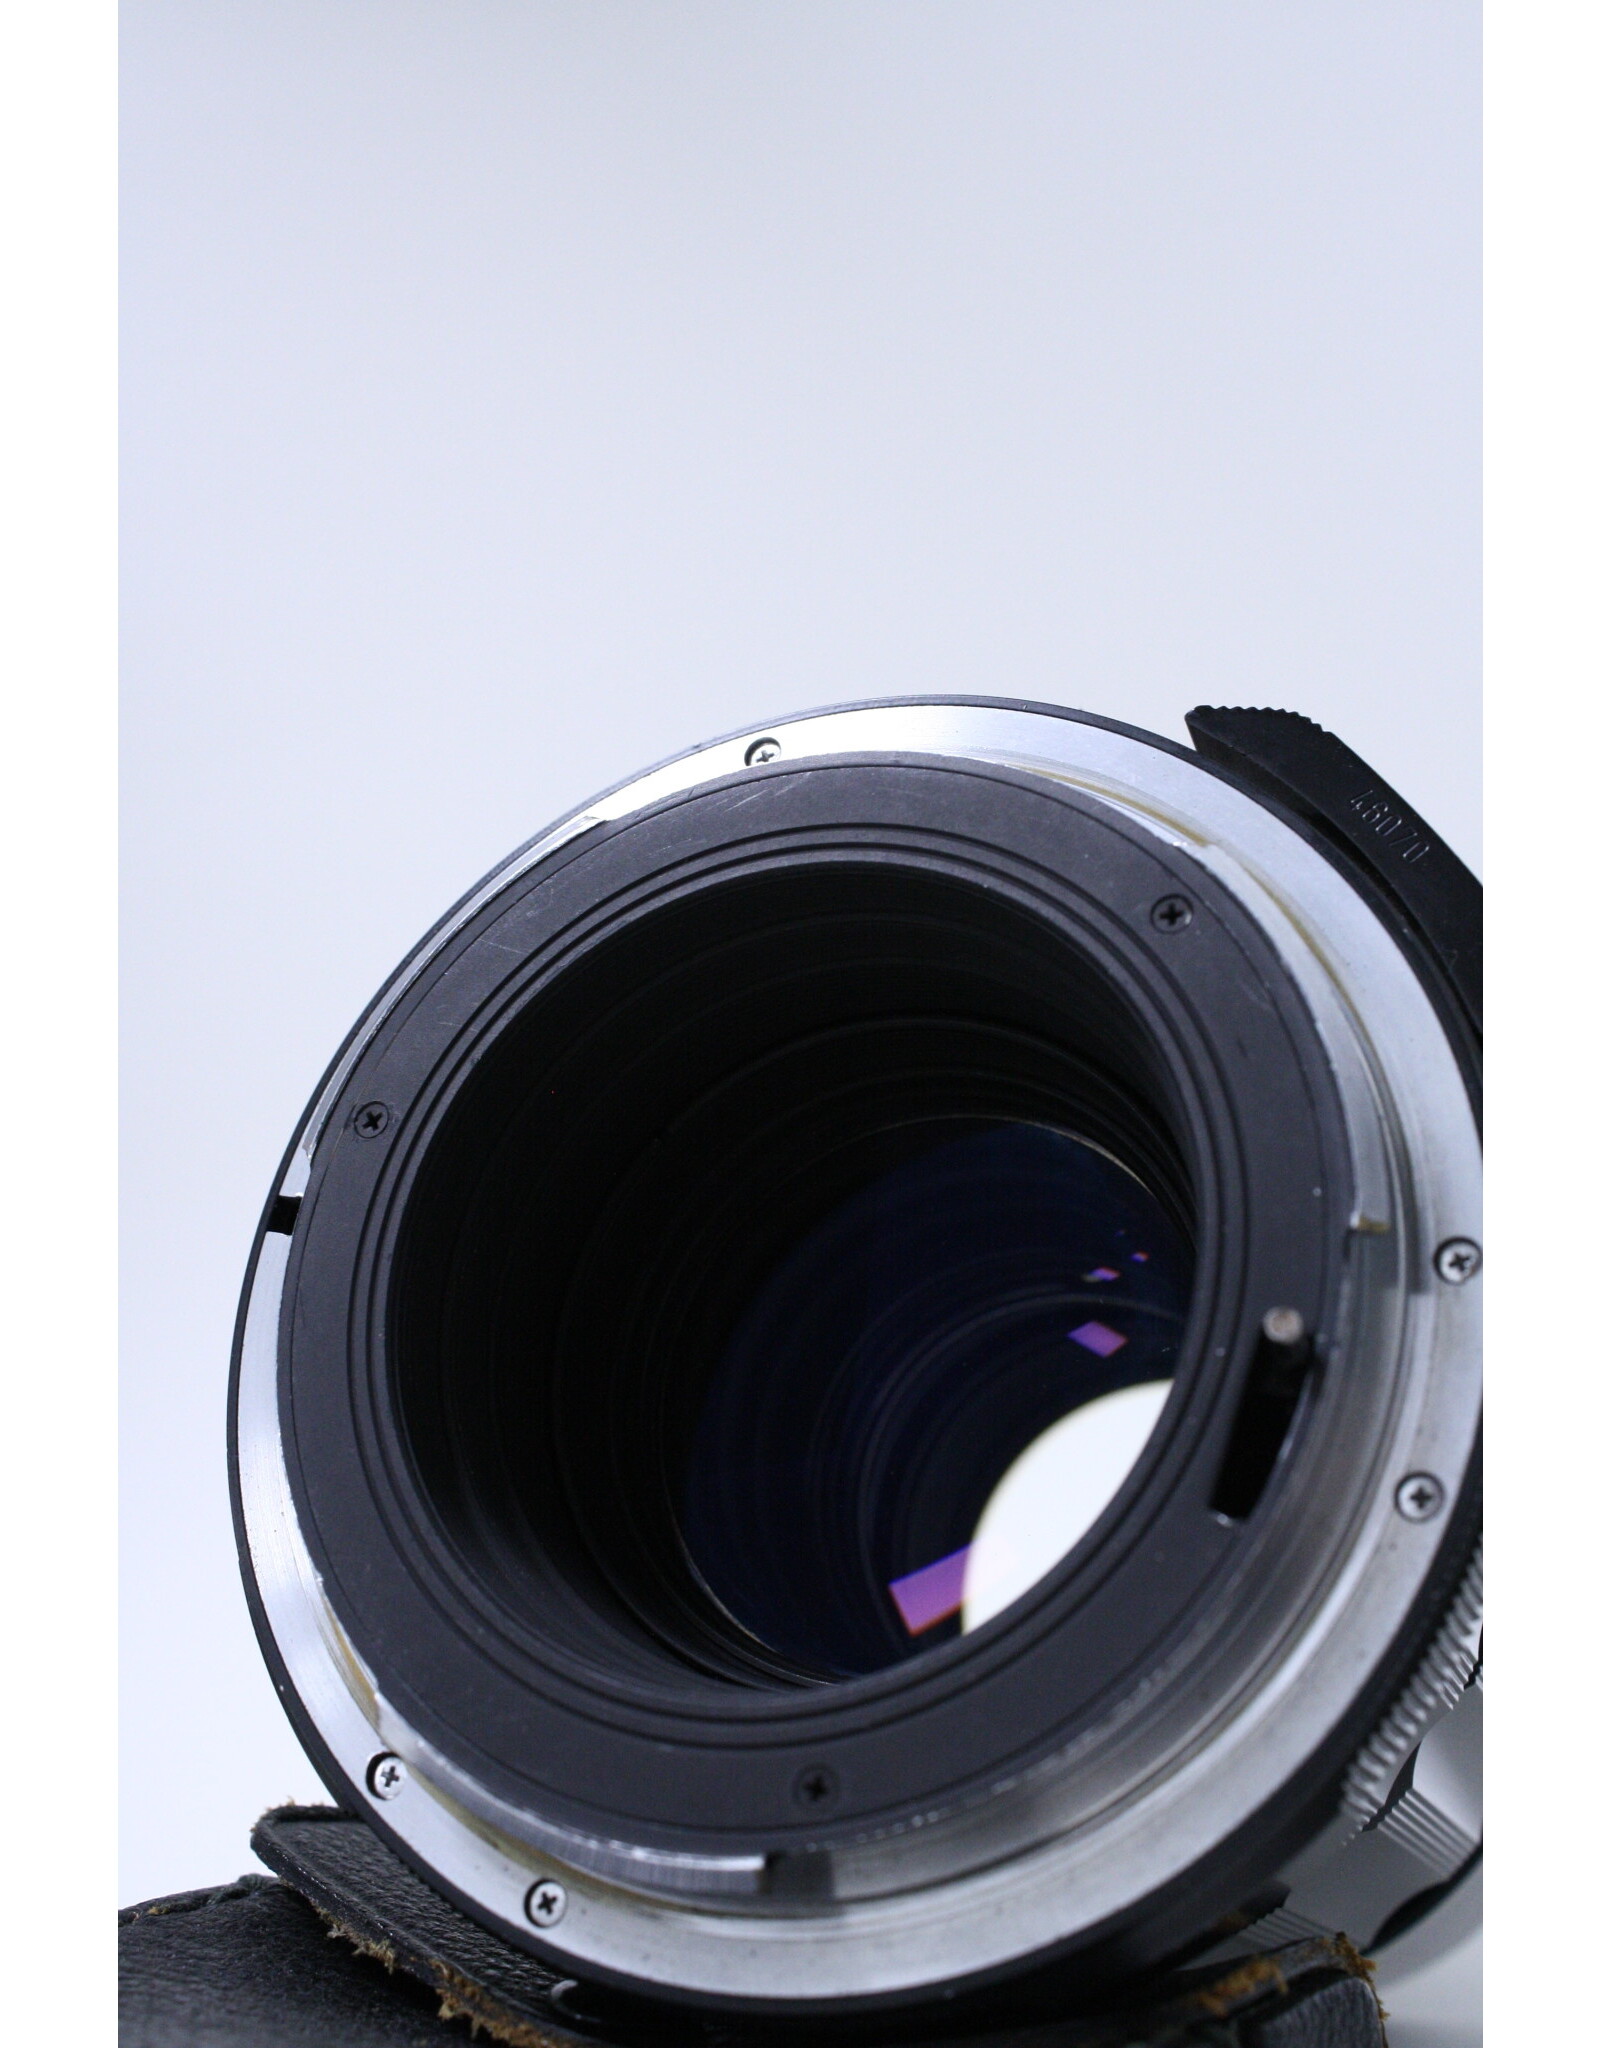 Takumar 200mm f/4 for Pentax 6x7 cameras.